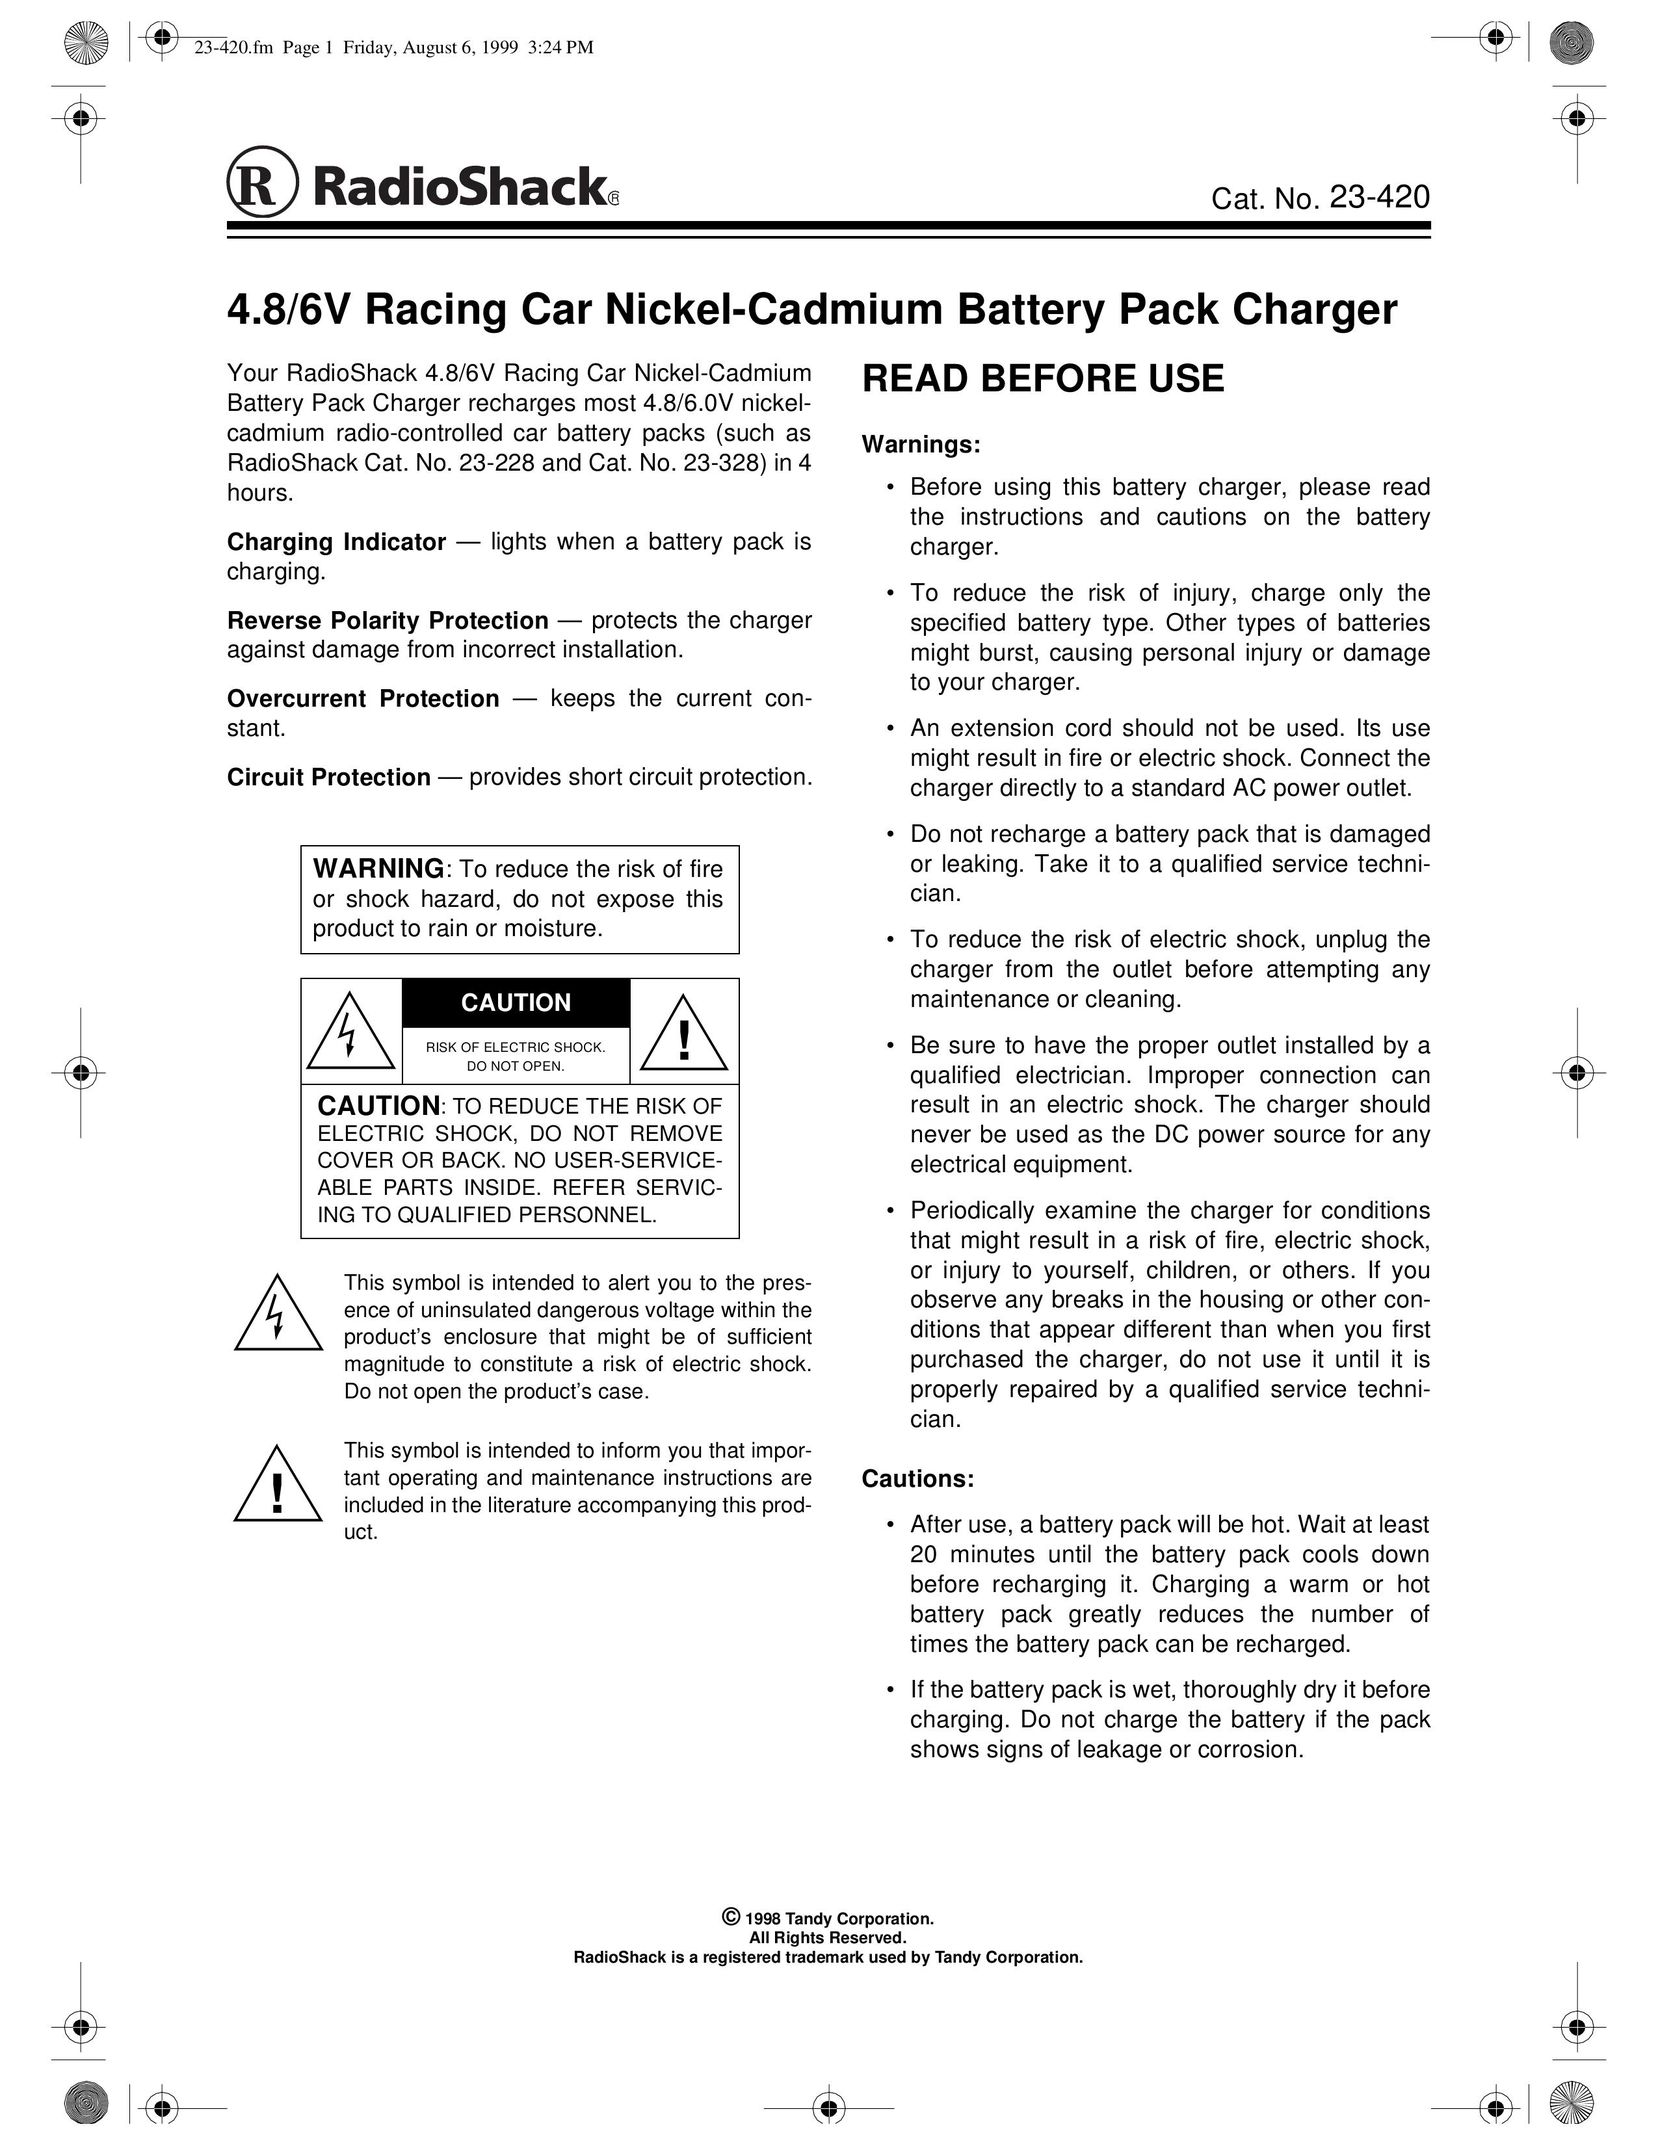 Radio Shack 23-328 Battery Charger User Manual